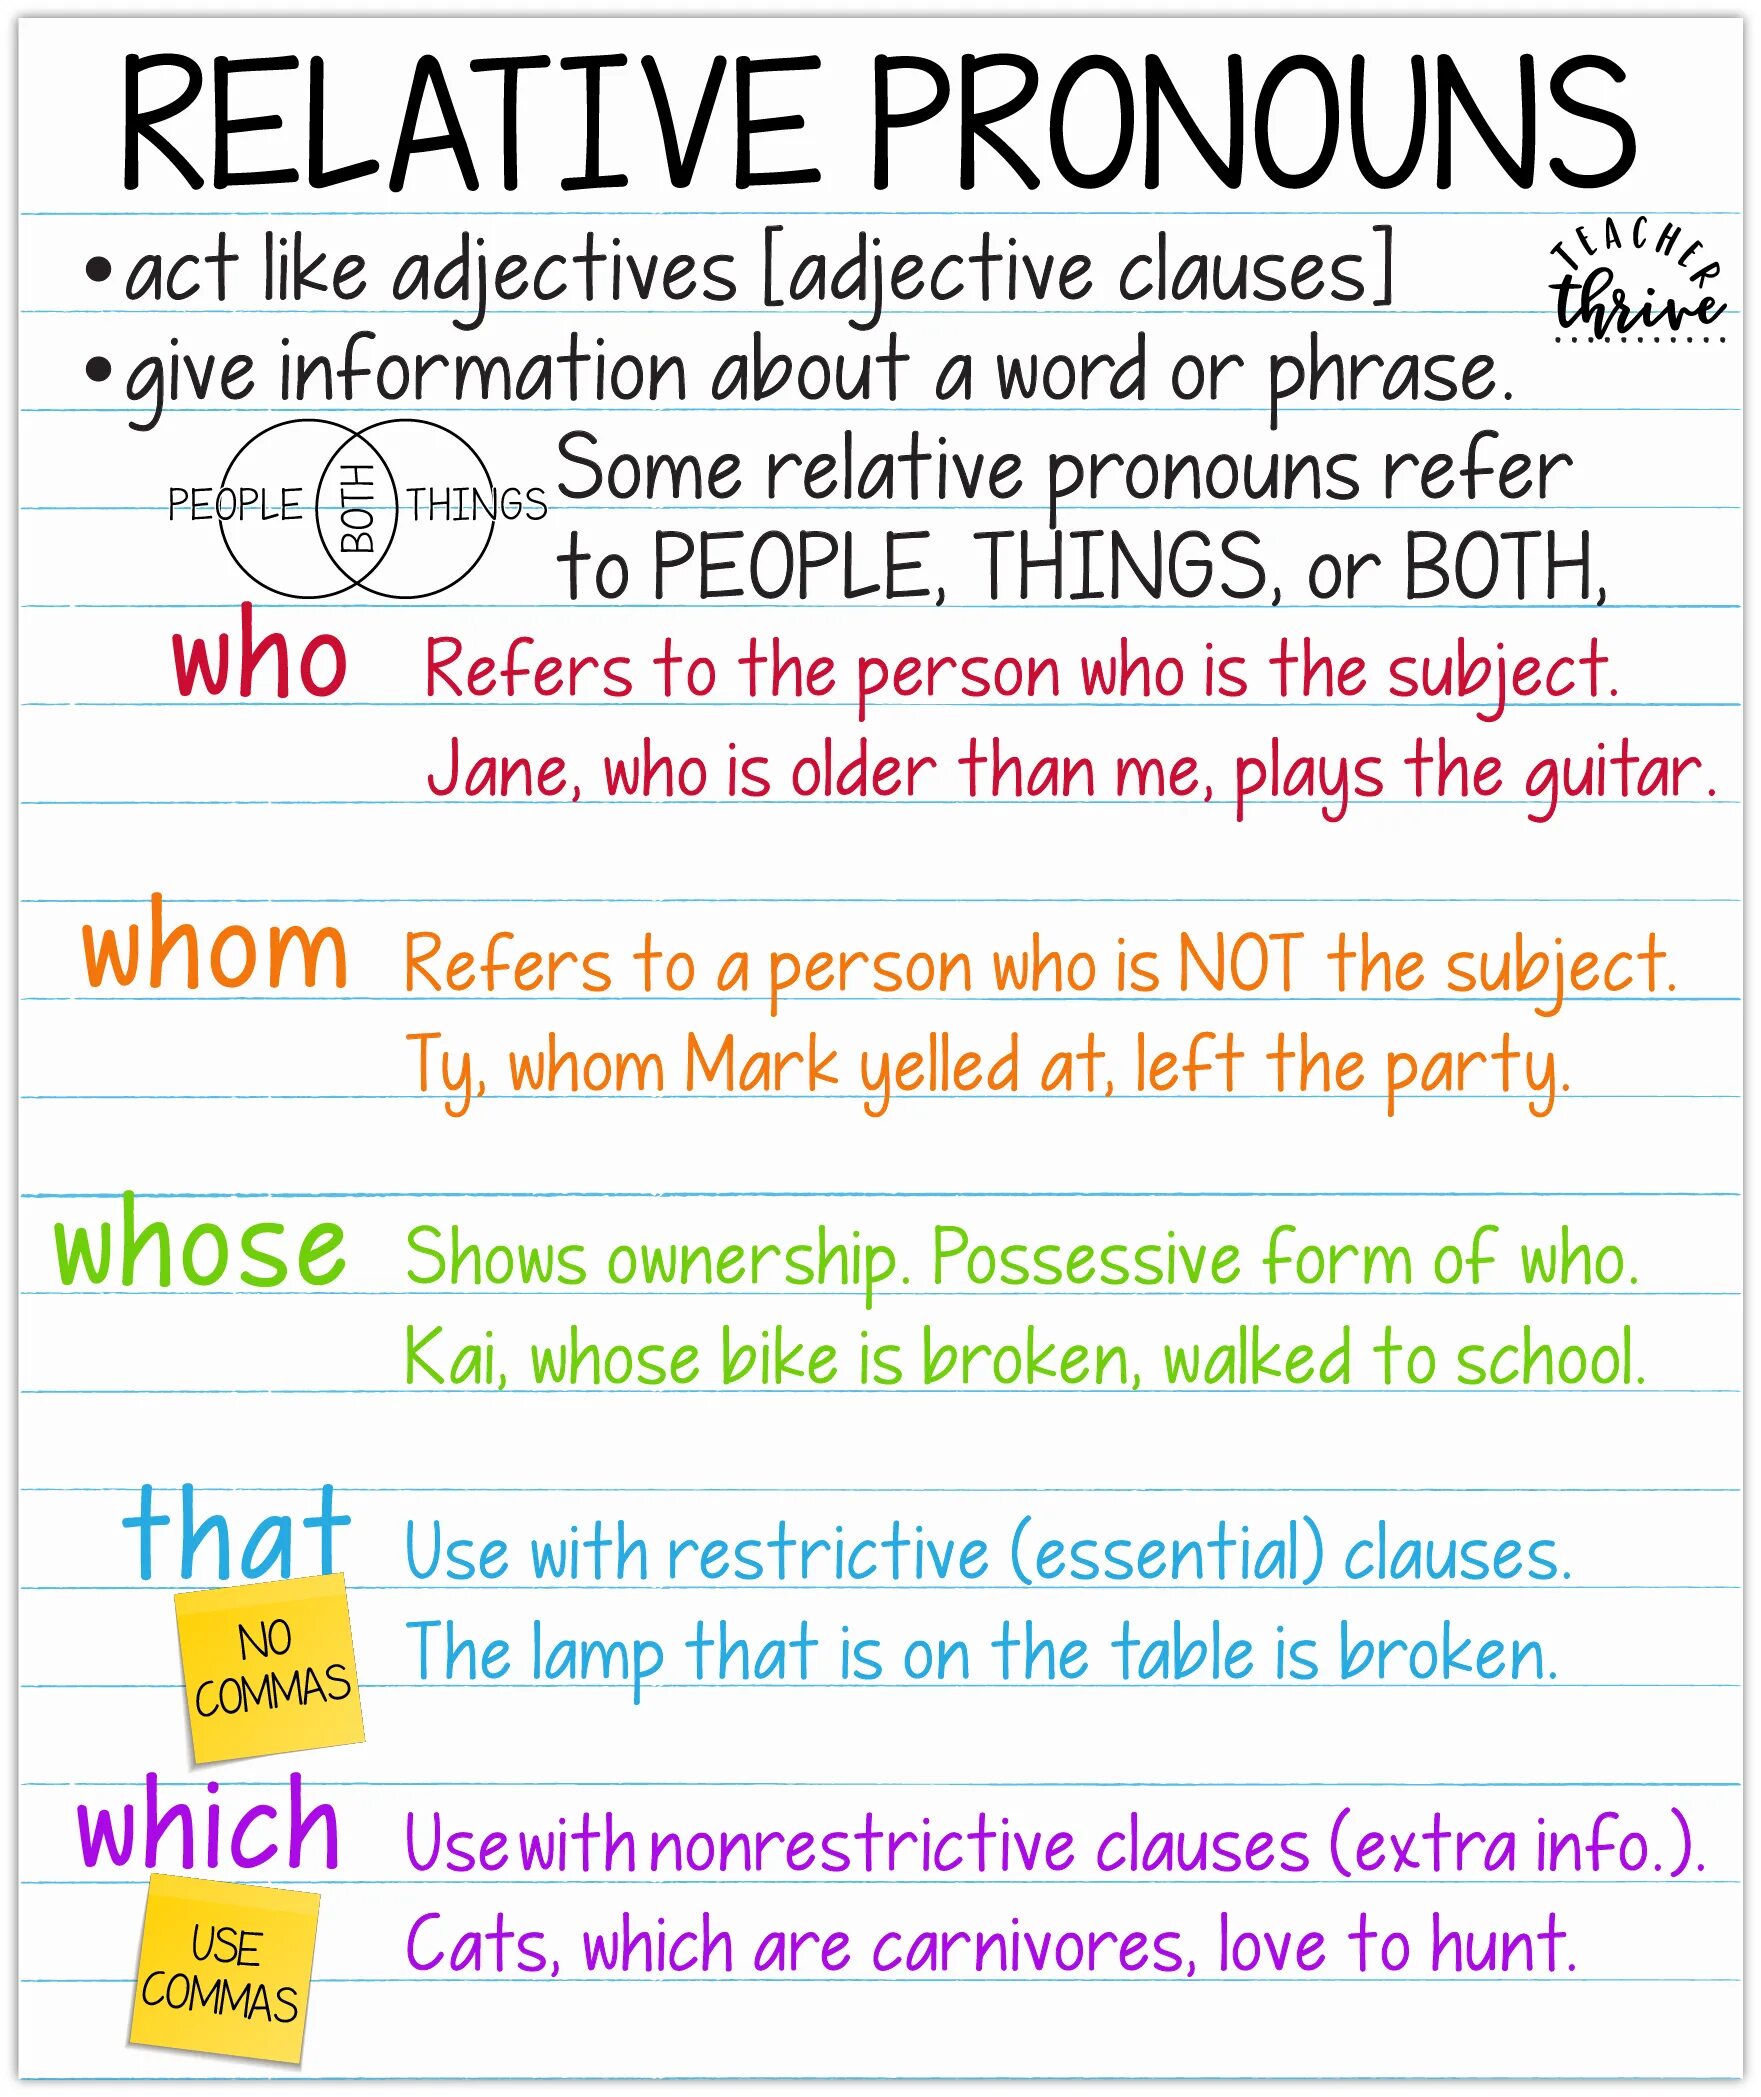 Relative pronouns. Information about pronouns. Relative pronouns примеры. Relative pronouns and adjectives. Relative pronouns adverbs who